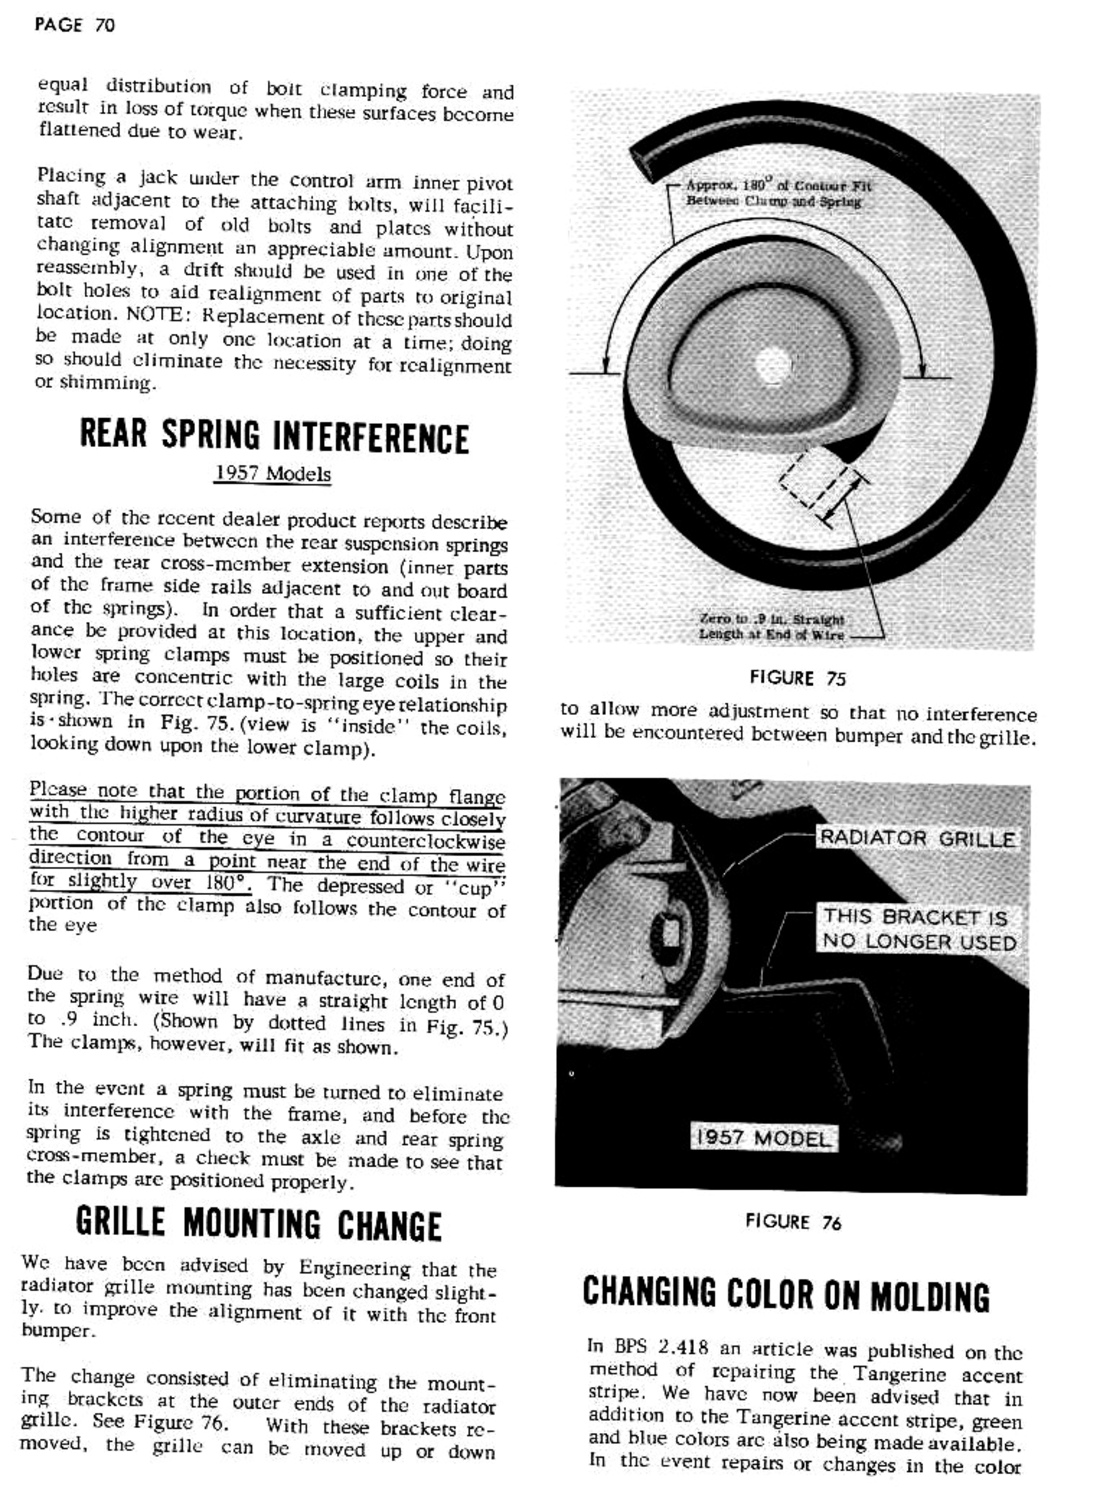 n_1957 Buick Product Service  Bulletins-075-075.jpg